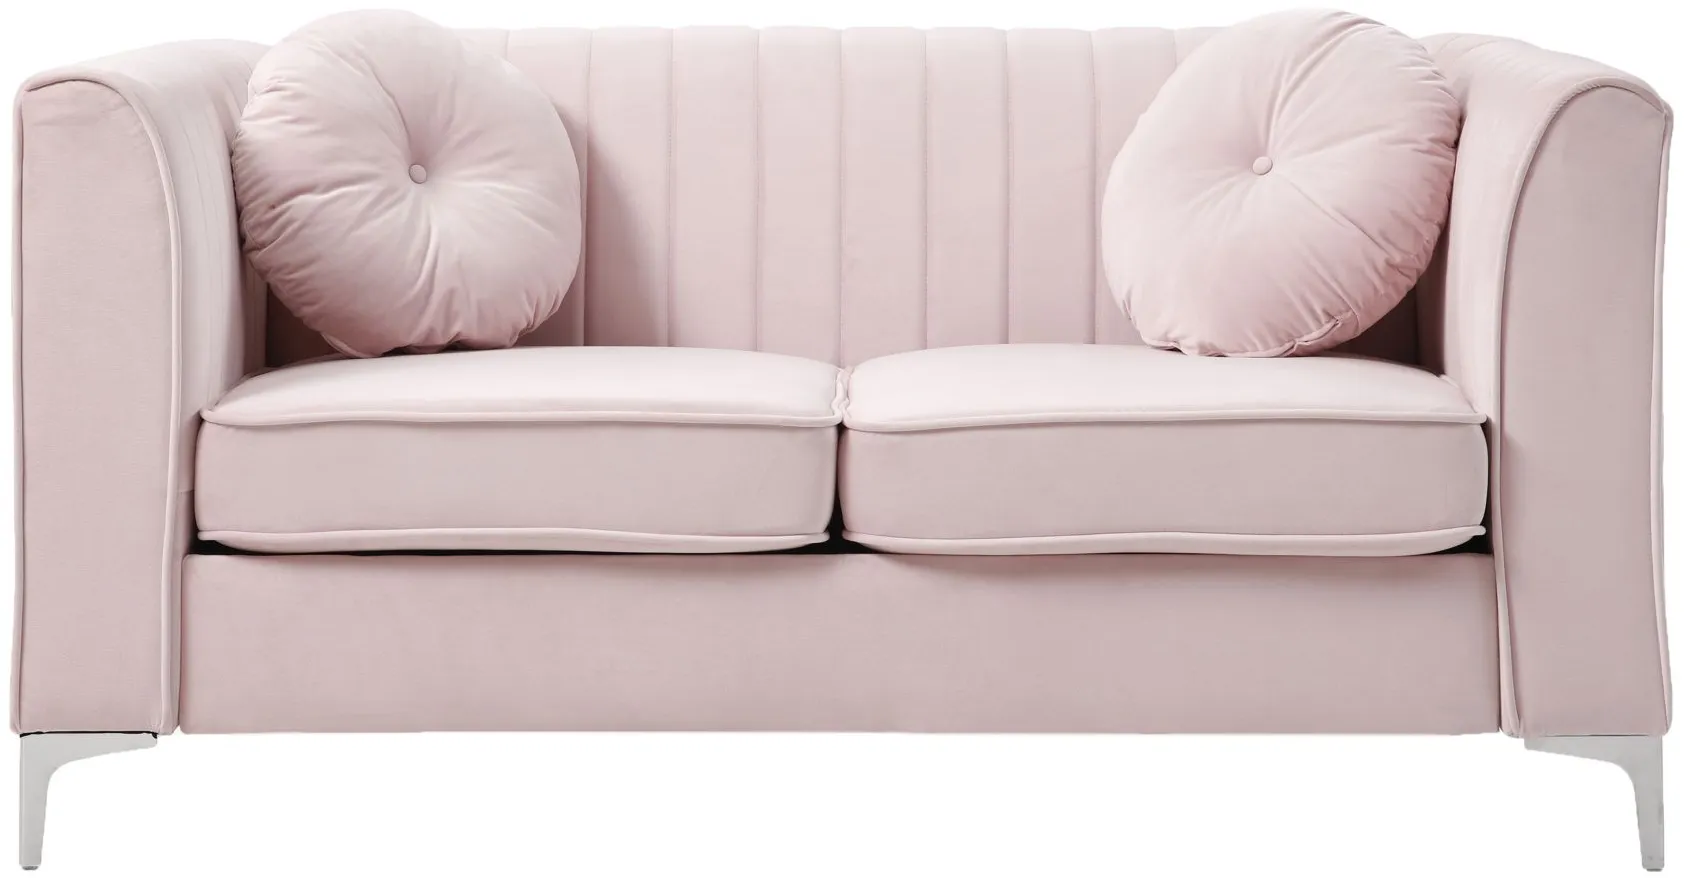 Deltona Loveseat in Pink by Glory Furniture